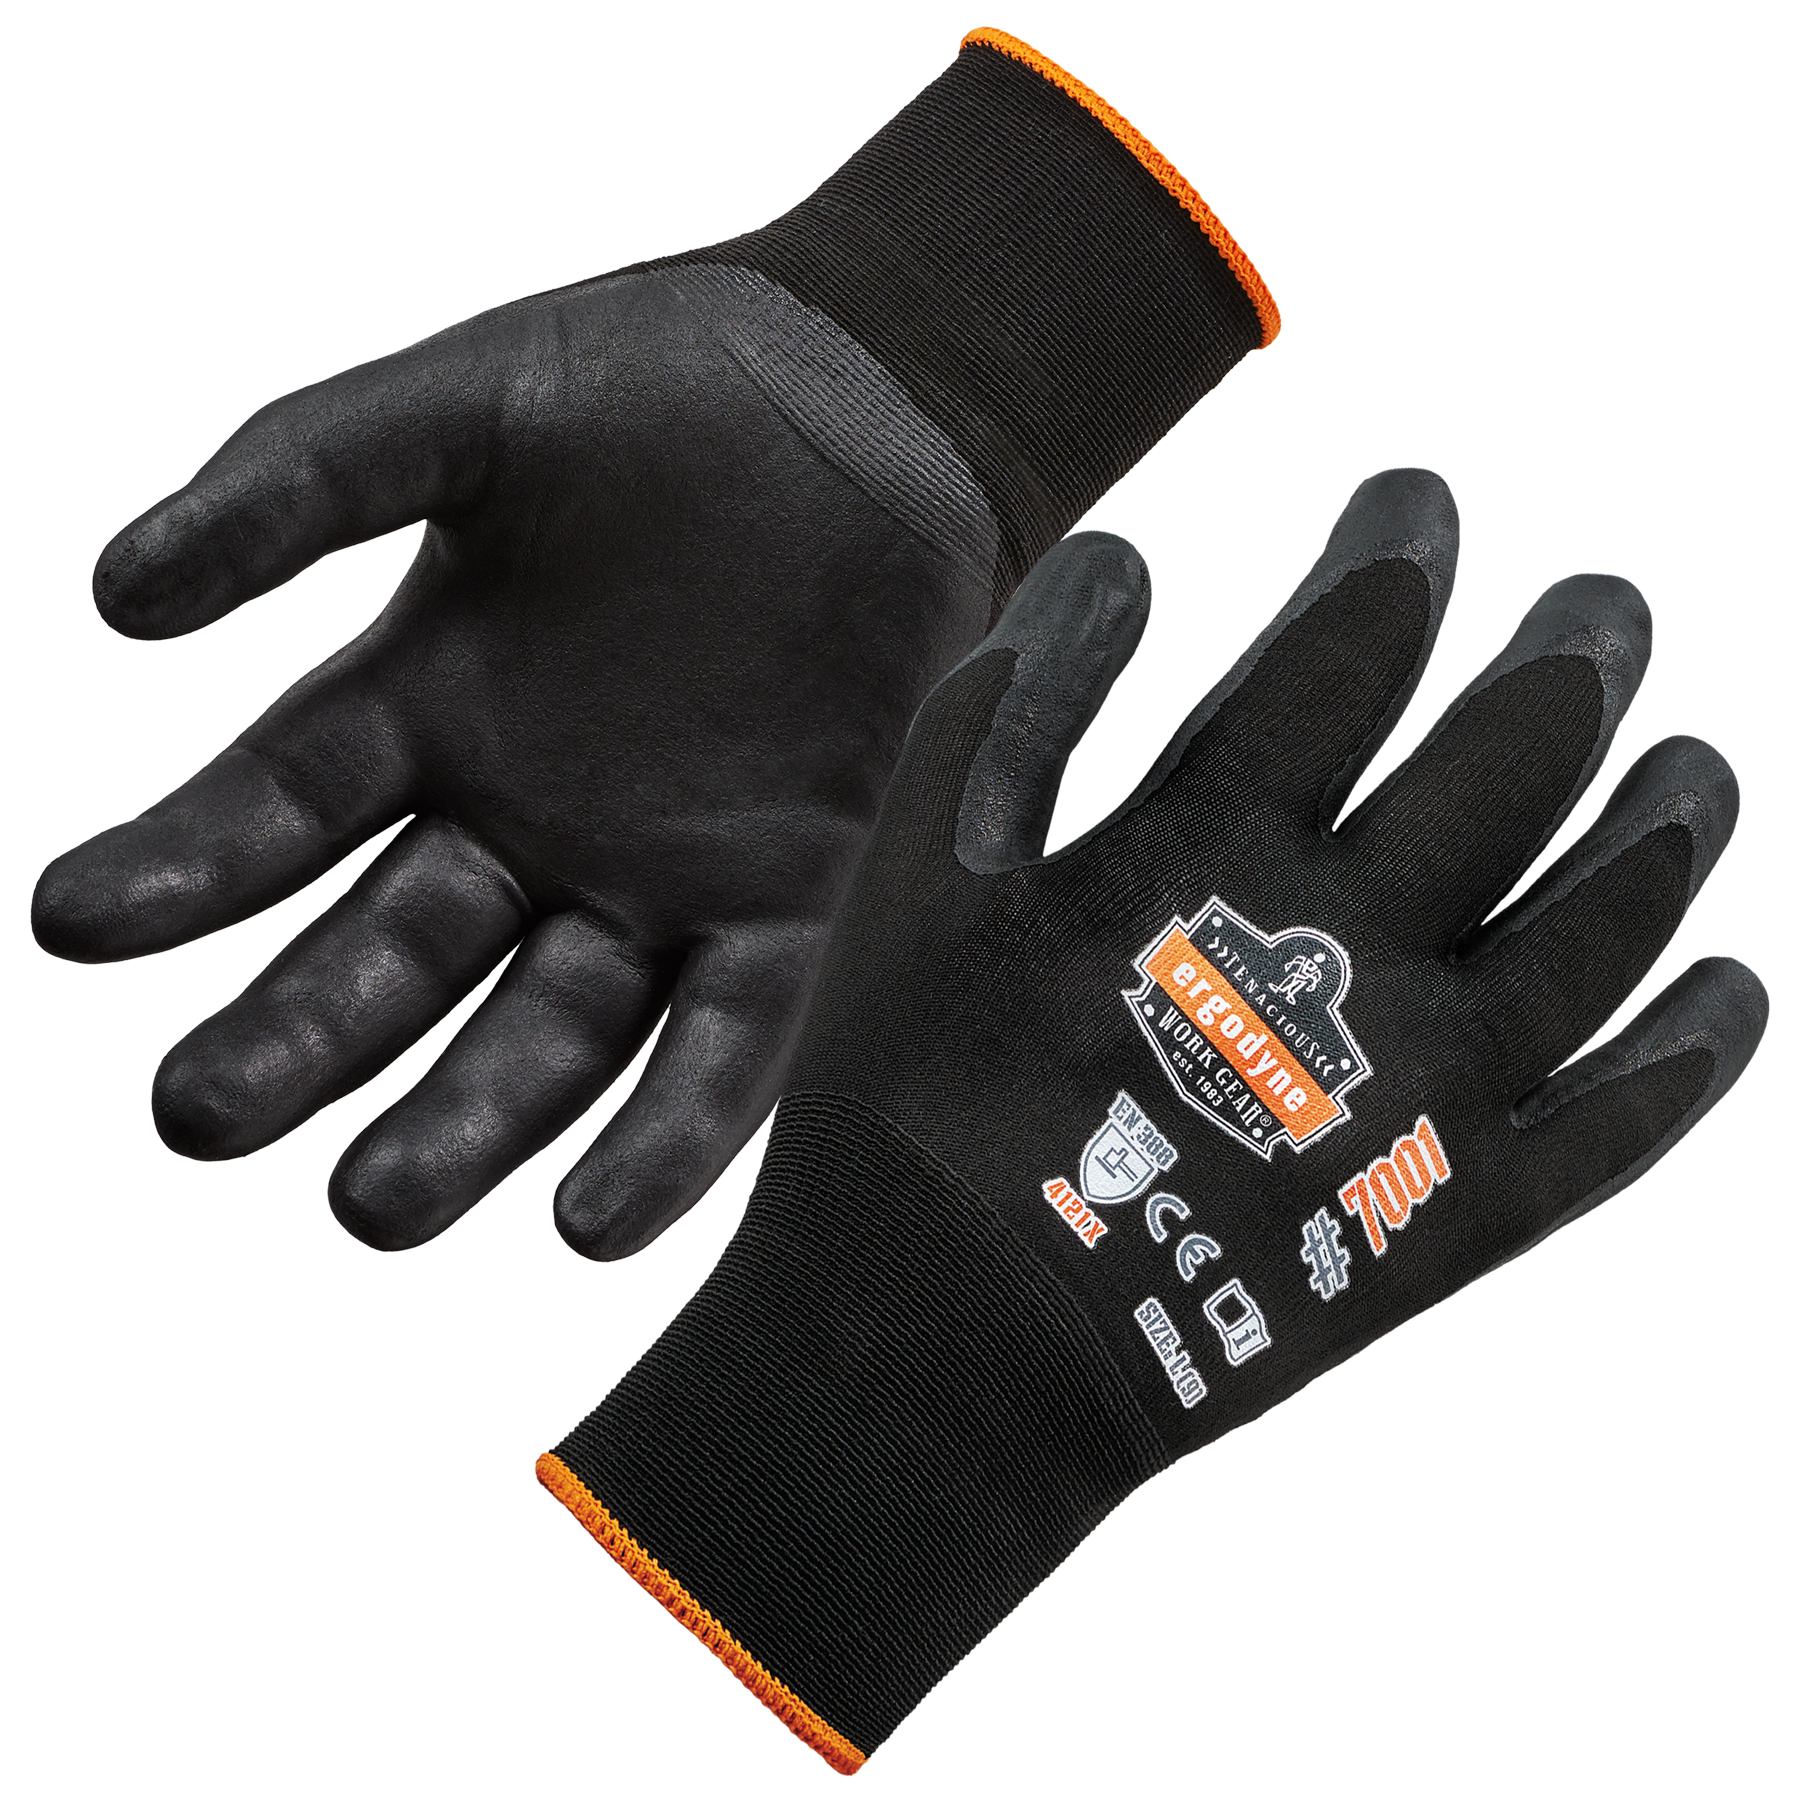 https://www.ergodyne.com/sites/default/files/product-images/17951-7001-nitrile-coated-gloves-pair_0.jpg